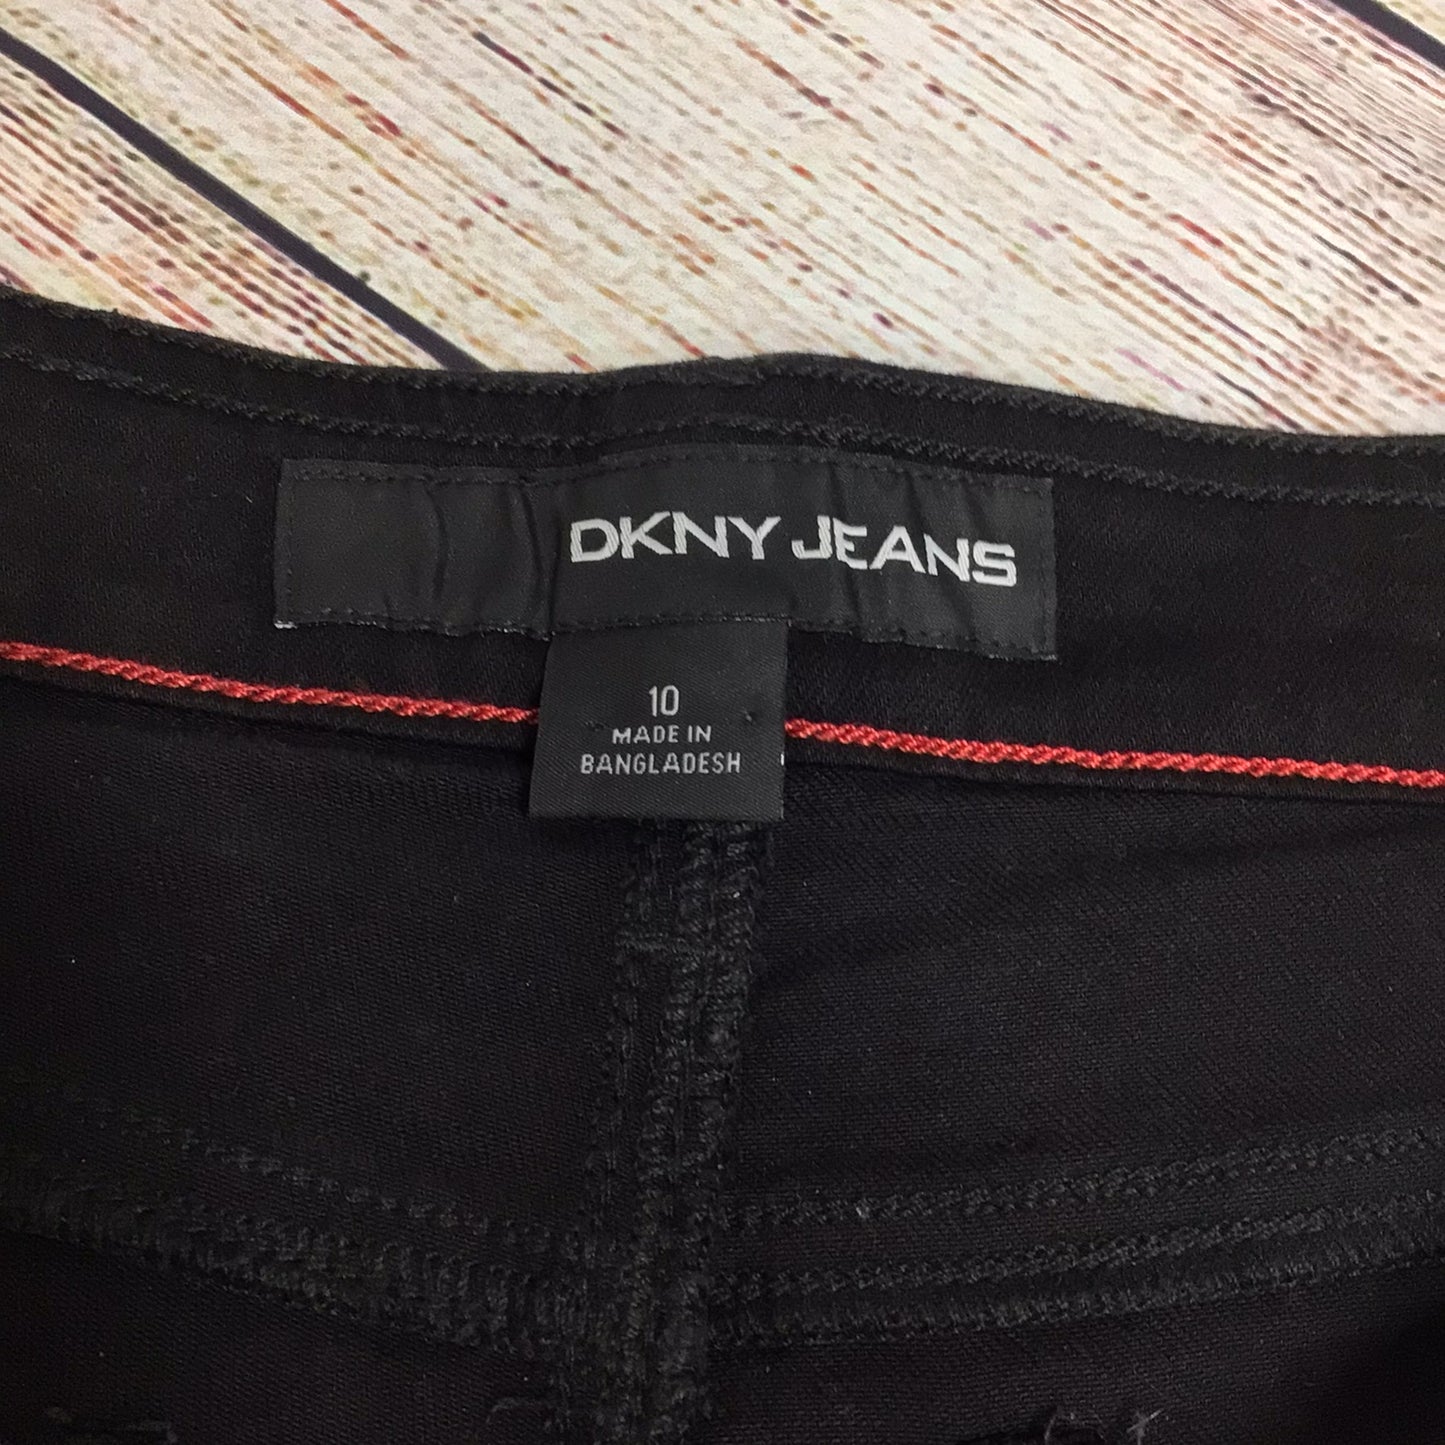 DKNY Jeans Black Jean Shorts Size 10